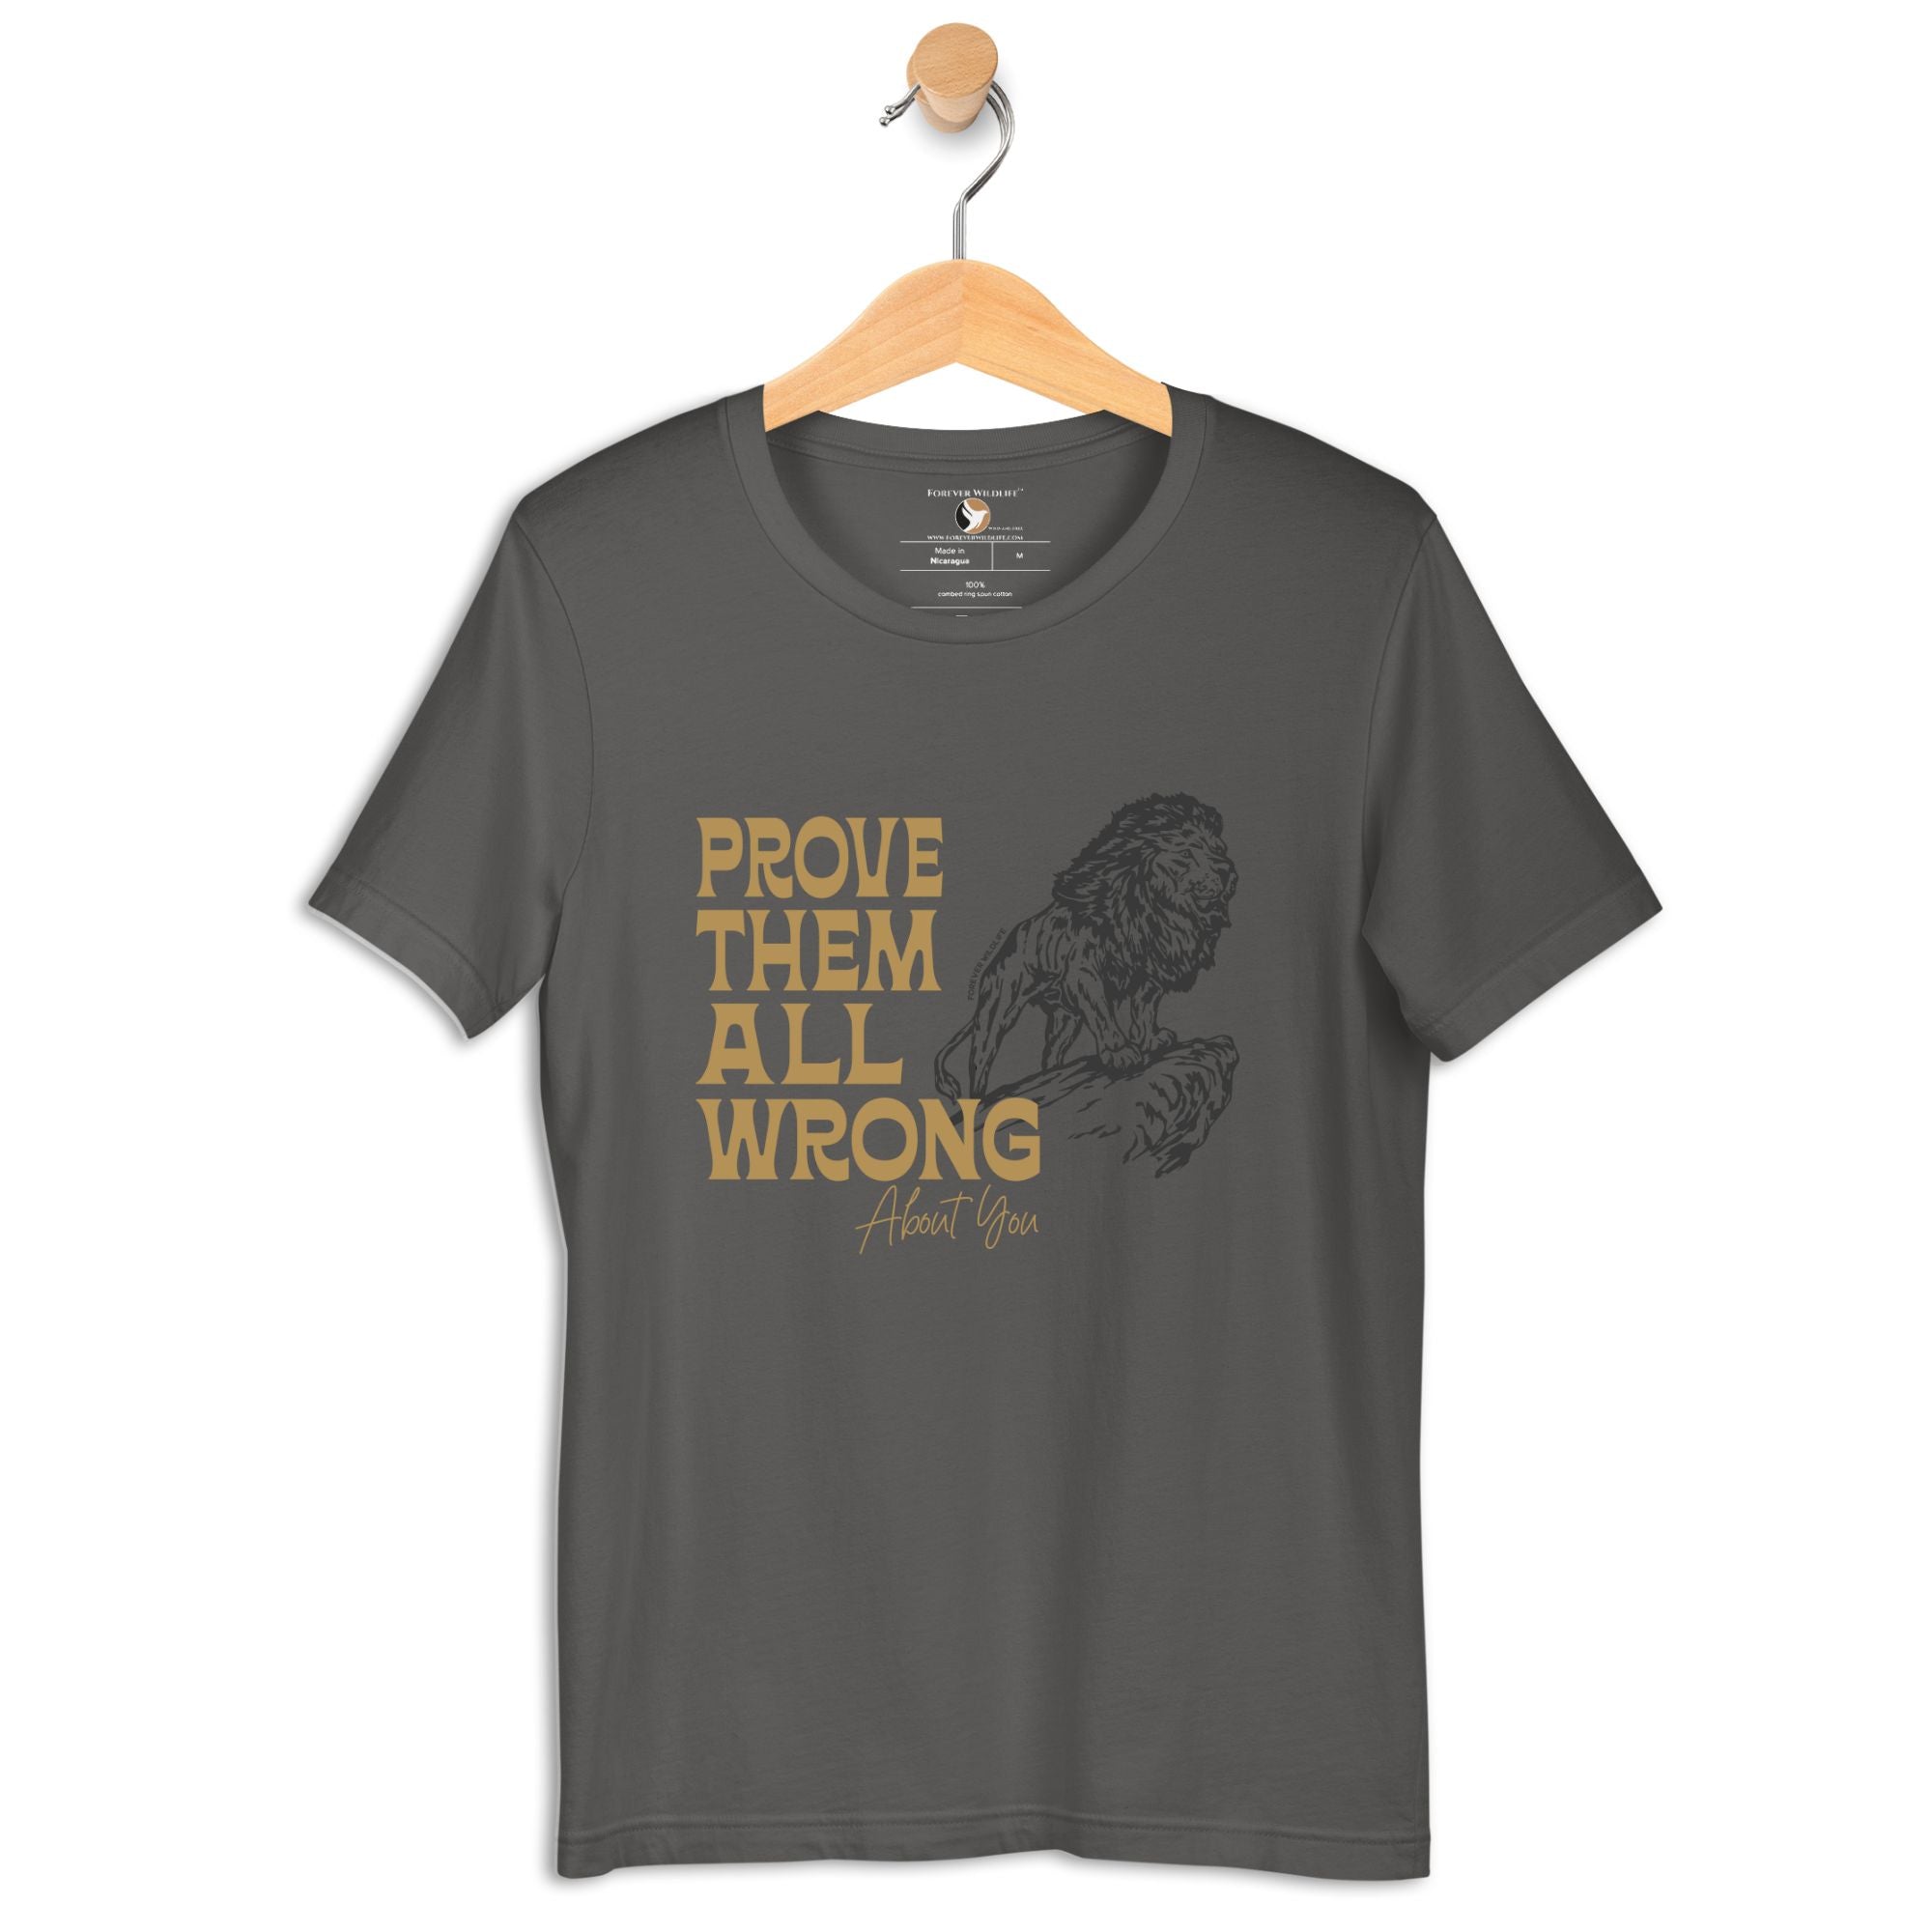 Lion T-Shirt in Asphalt – Premium Wildlife T-Shirt Design, Wildlife Clothing & Apparel from Forever Wildlife